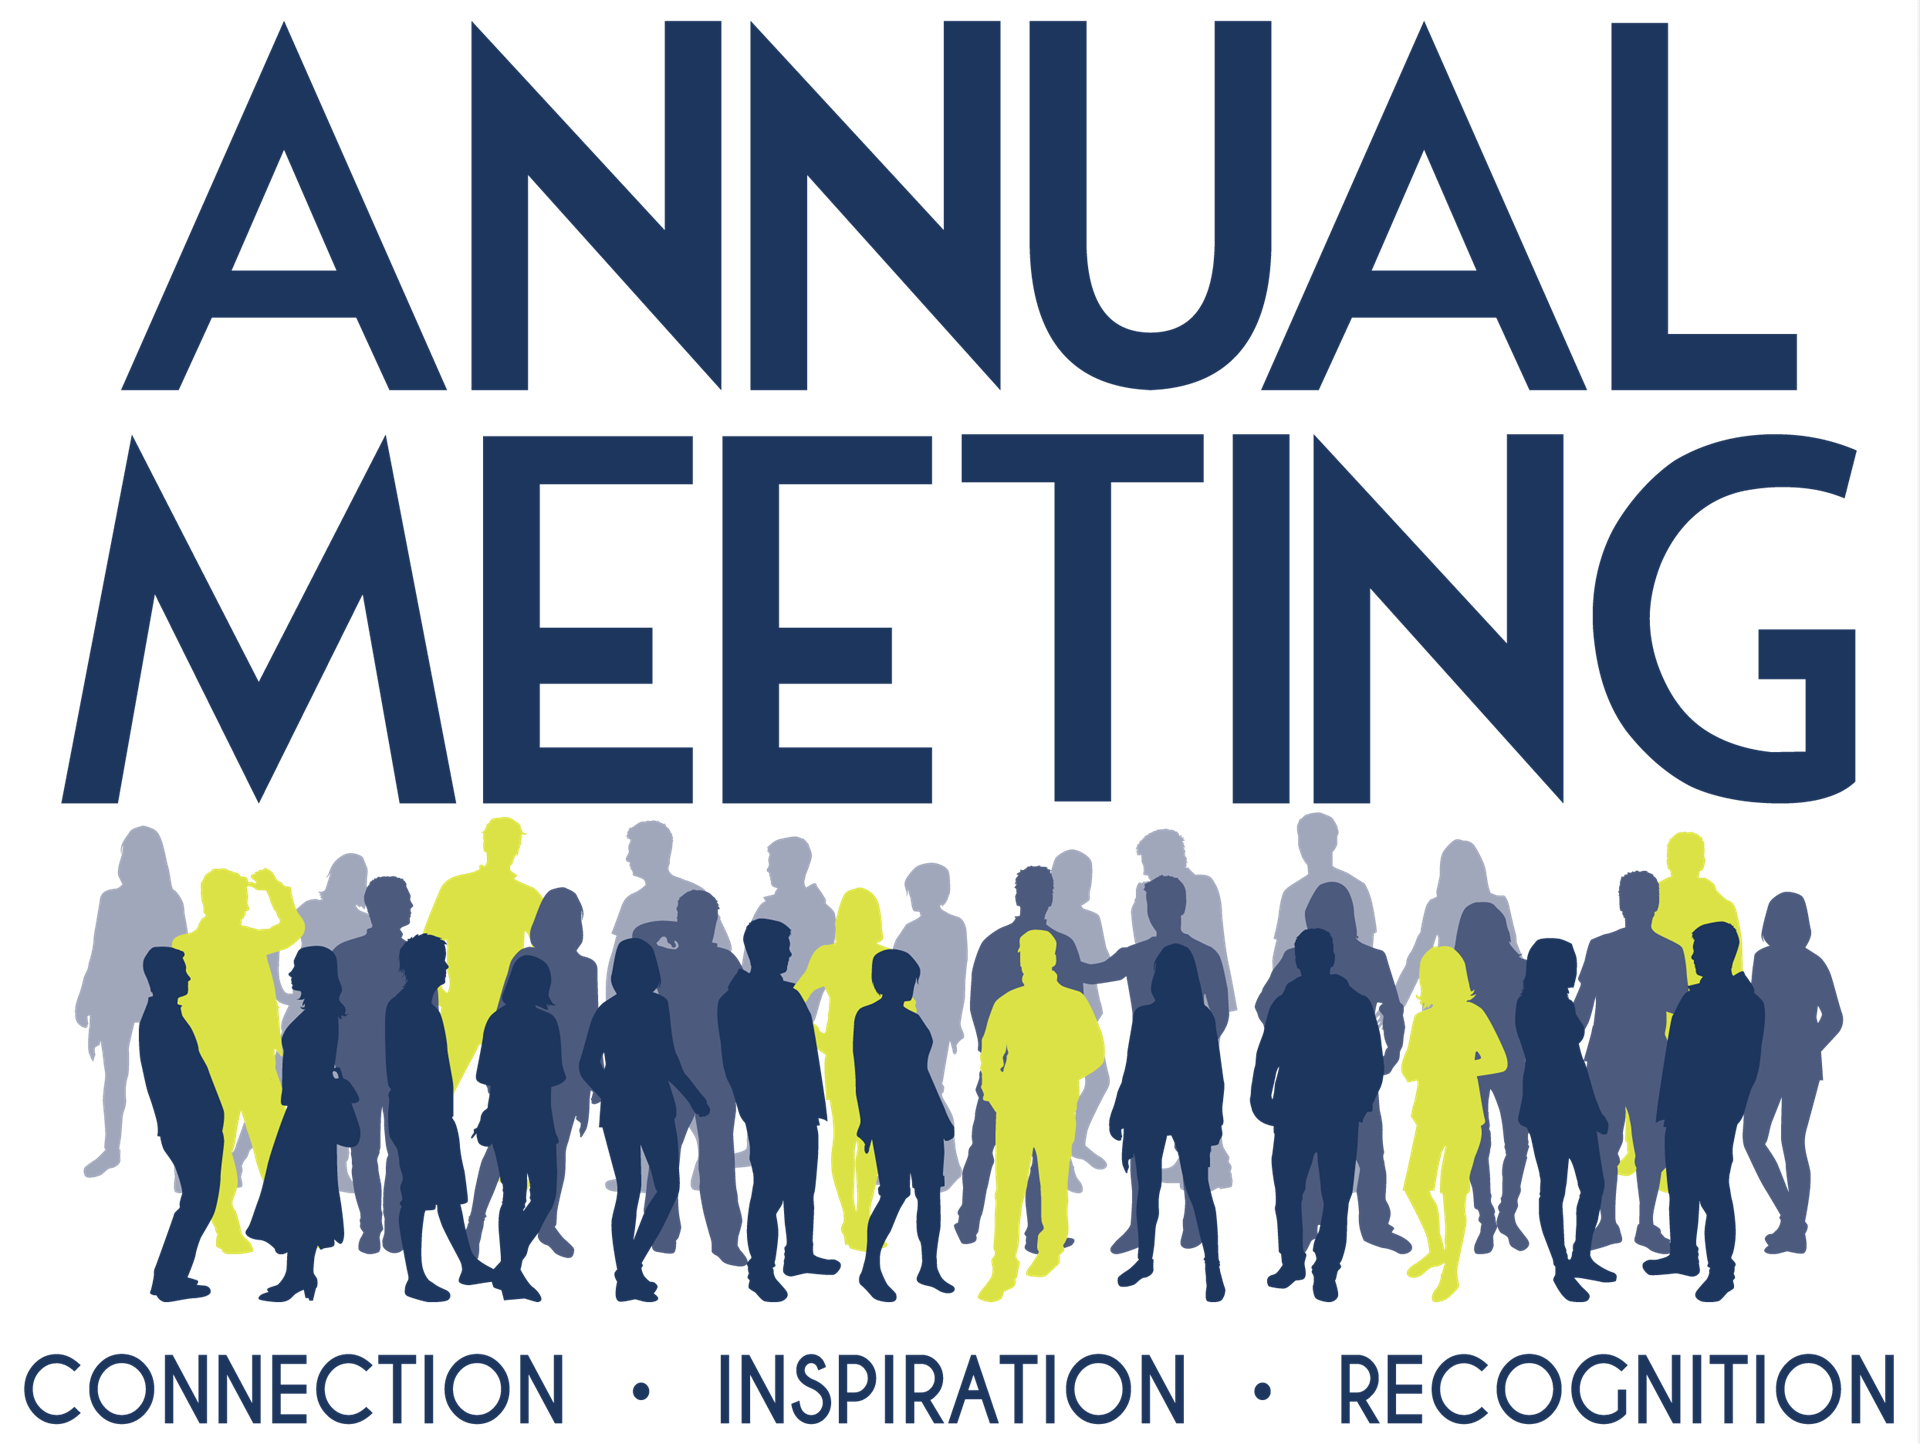 Annual Meeting 